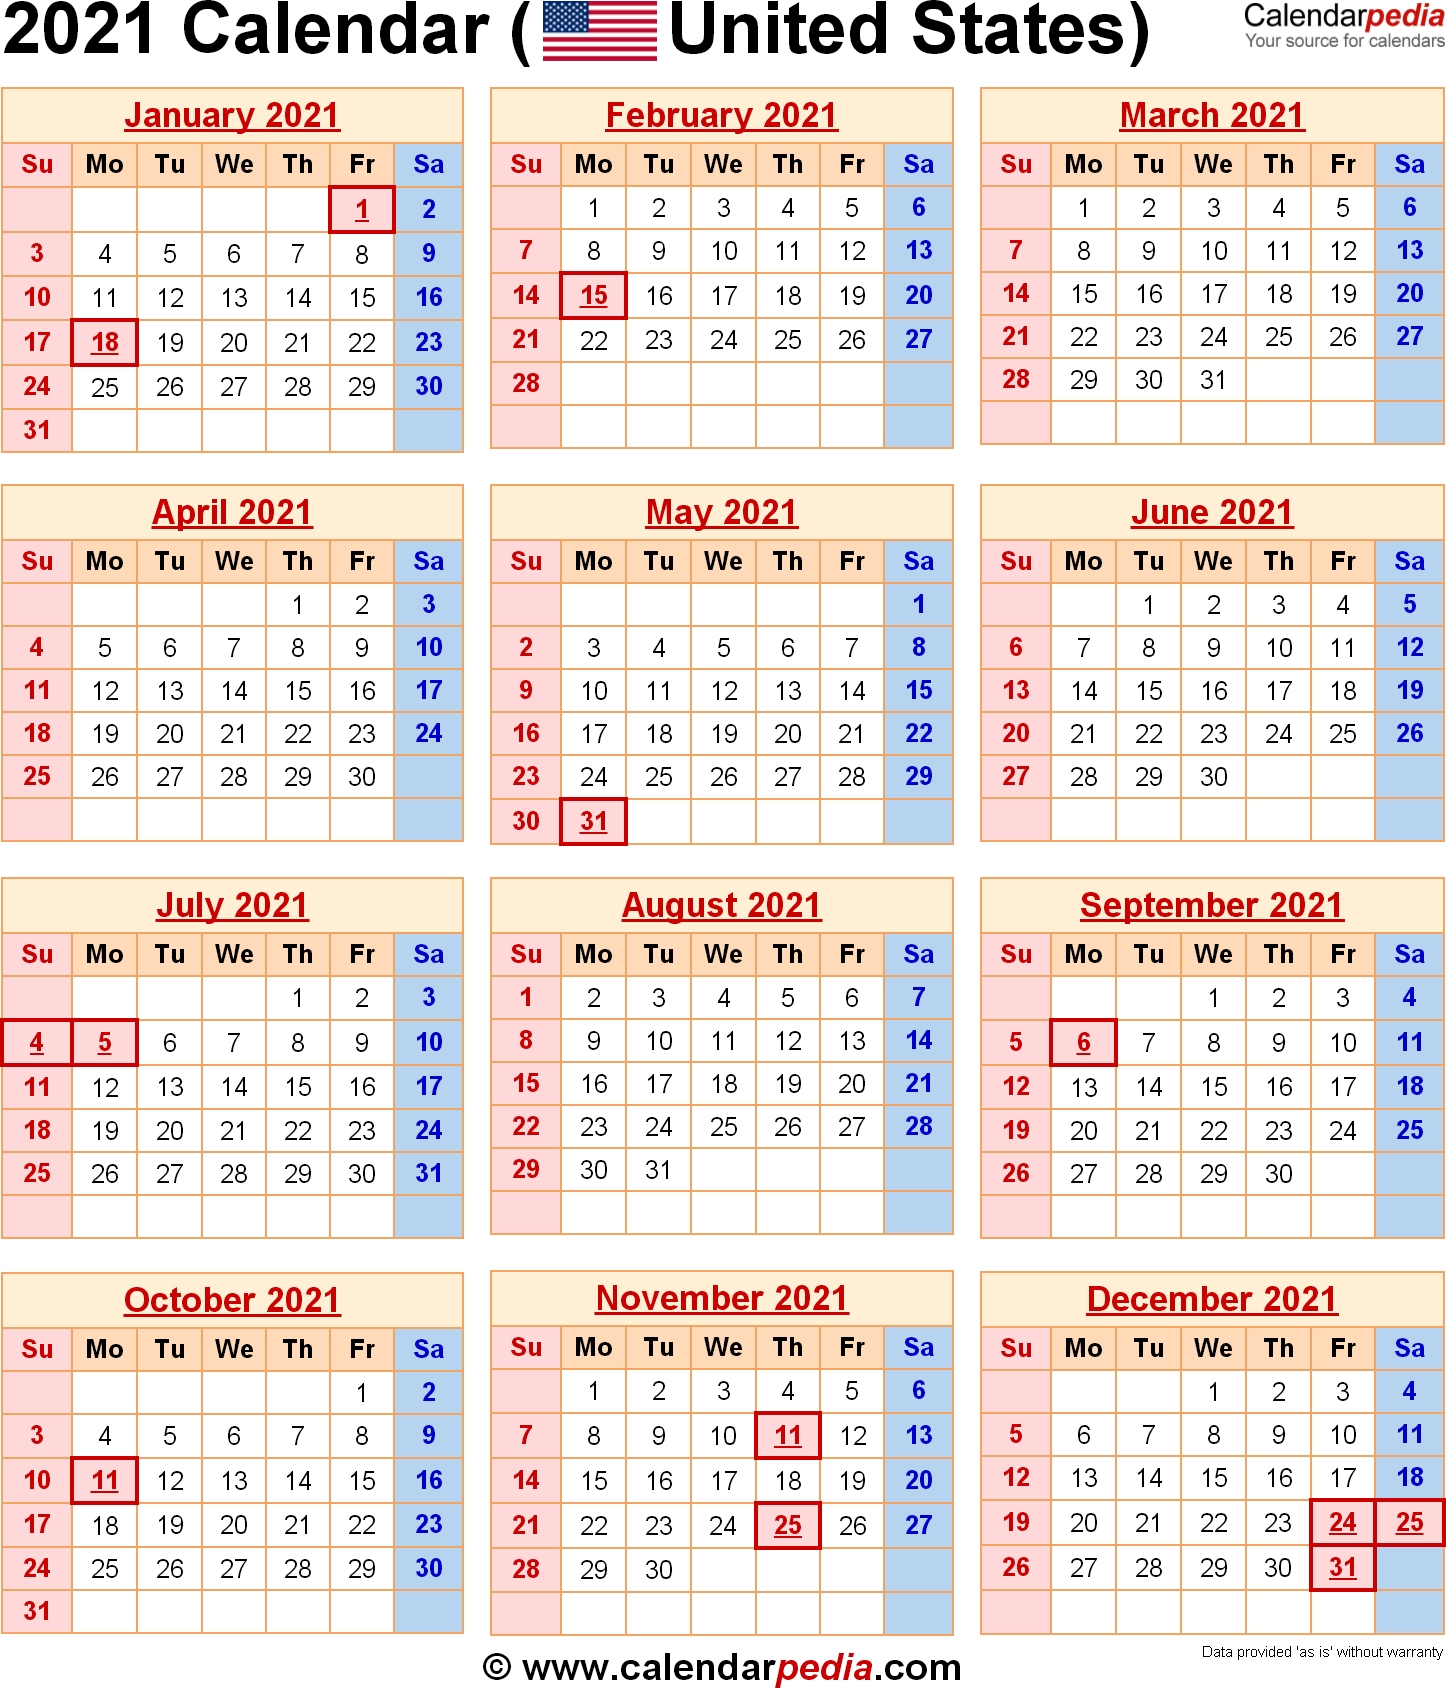 2021 Calendar With Federal Holidays